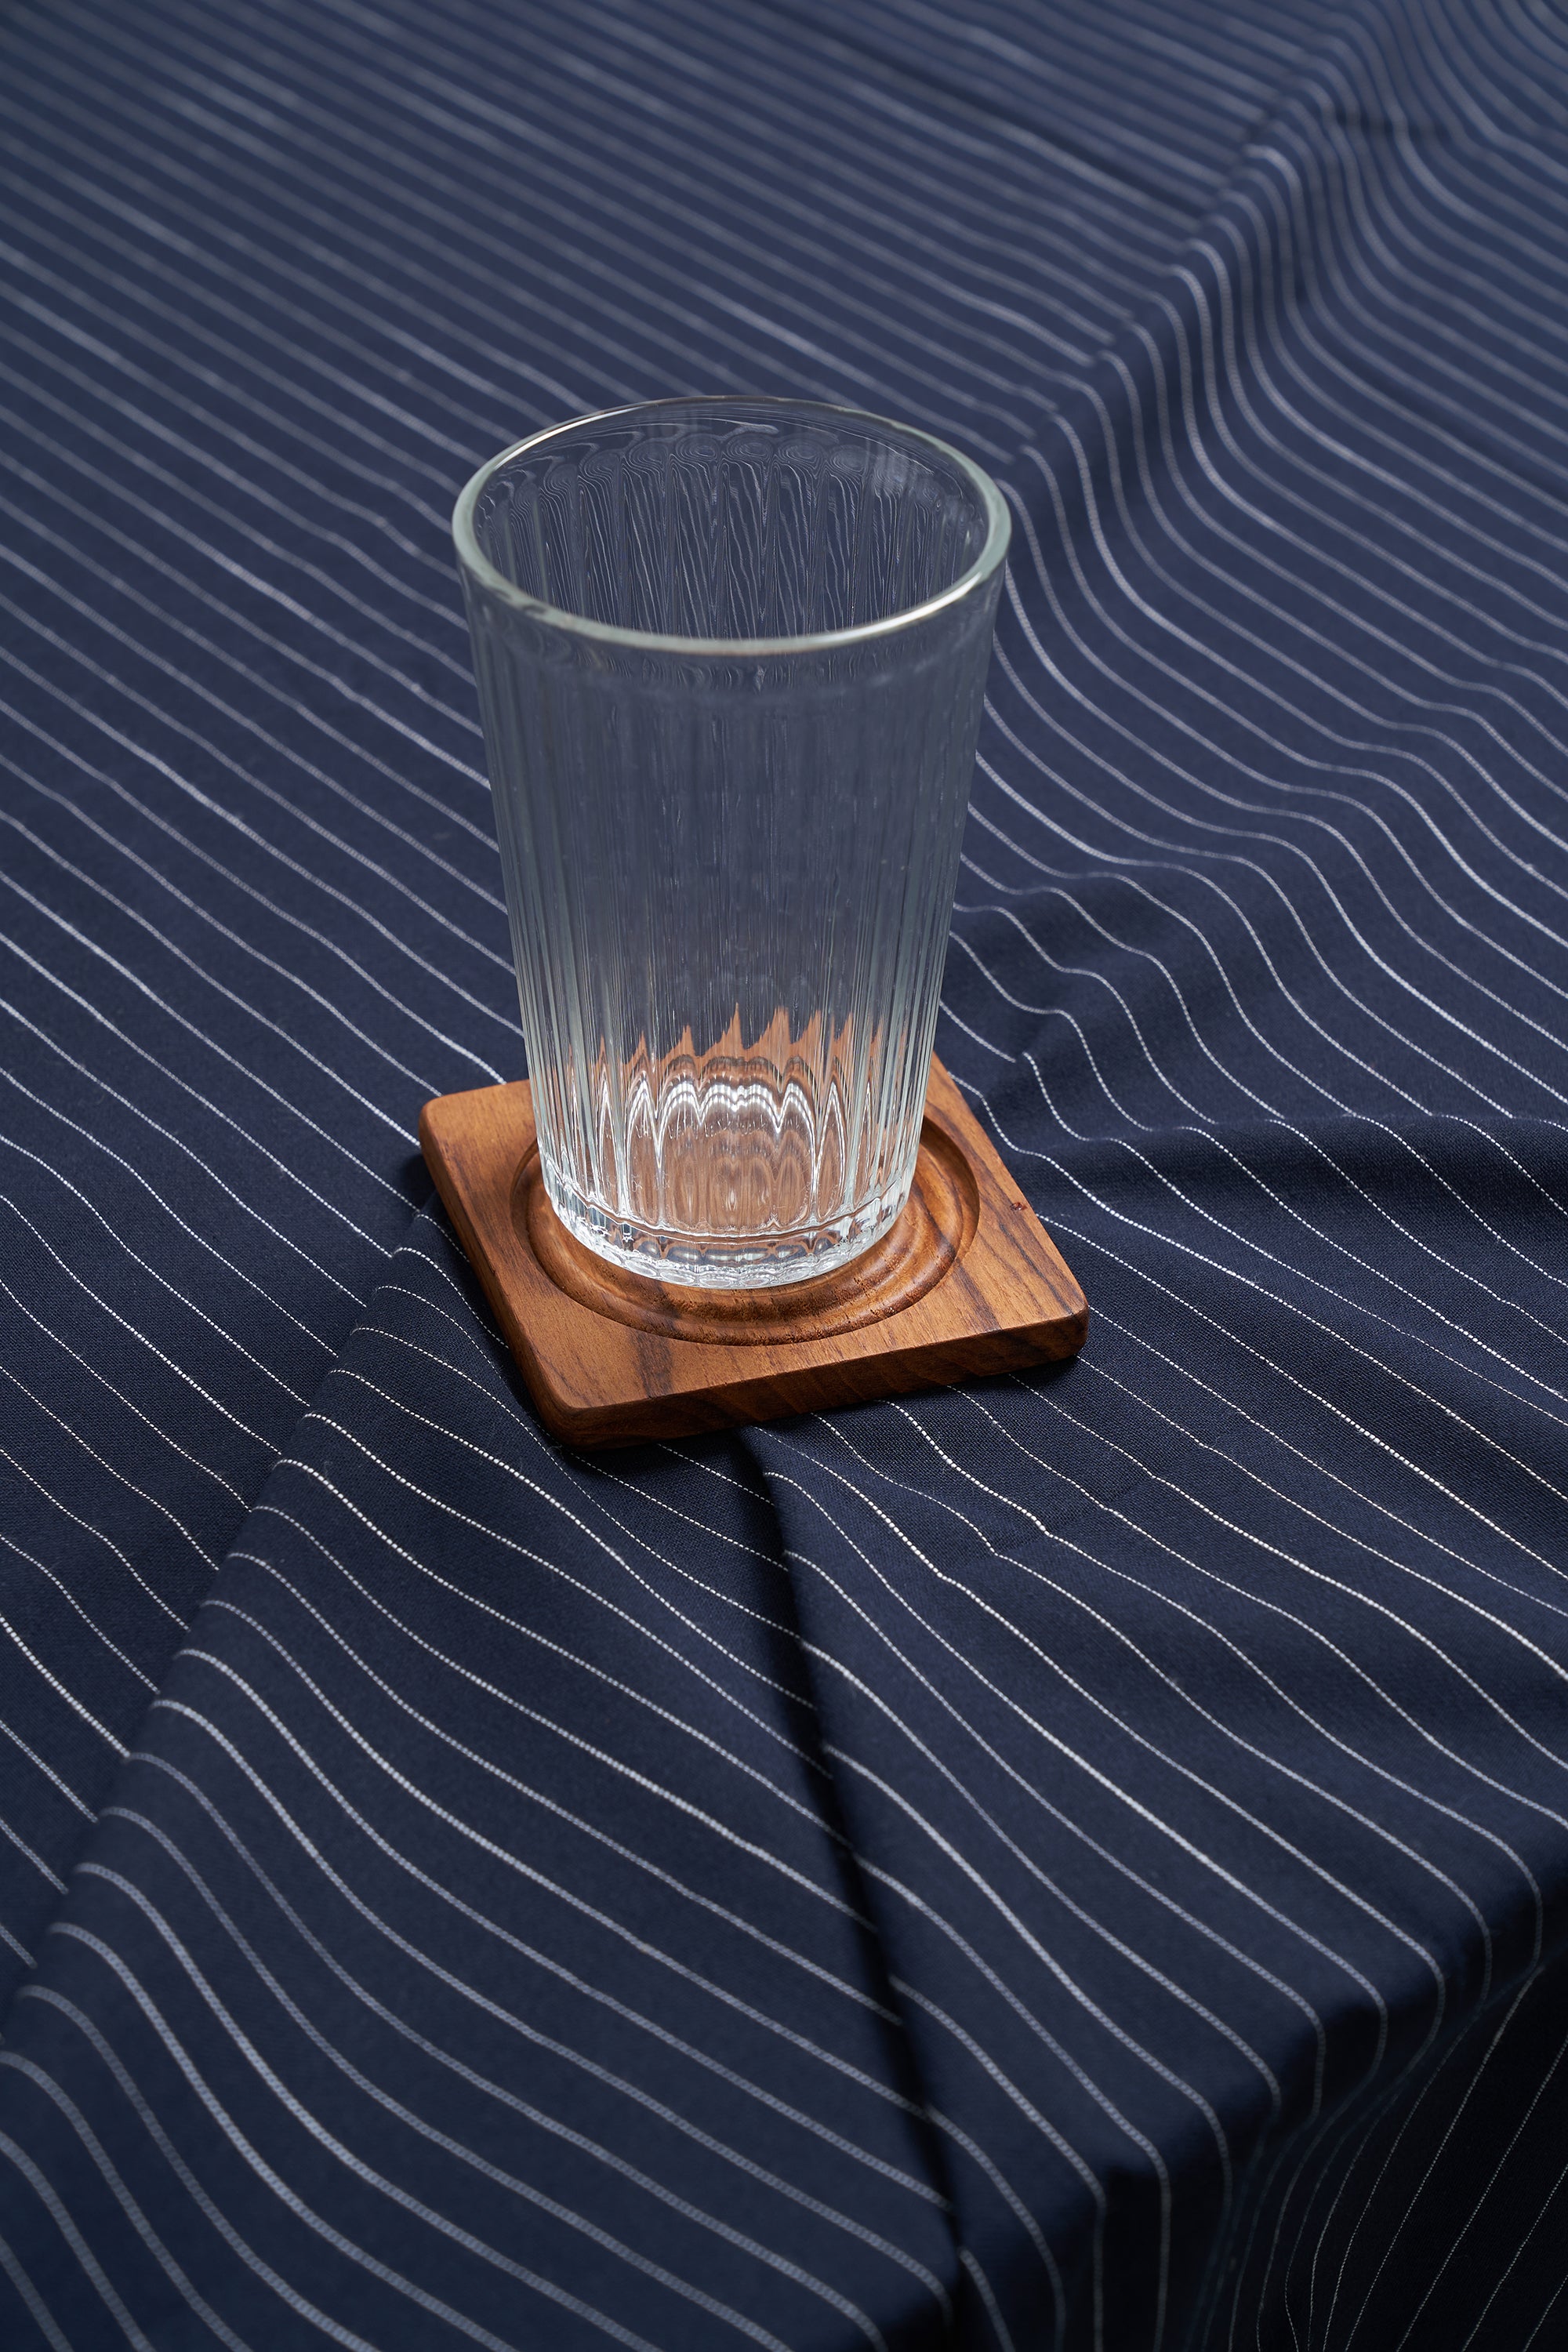 Han&Co. Table Cloth – Navy Dot ผ้าปูโต๊ะ ผ้าคลุมโต๊ะ สี Navy Dot HCTBC11